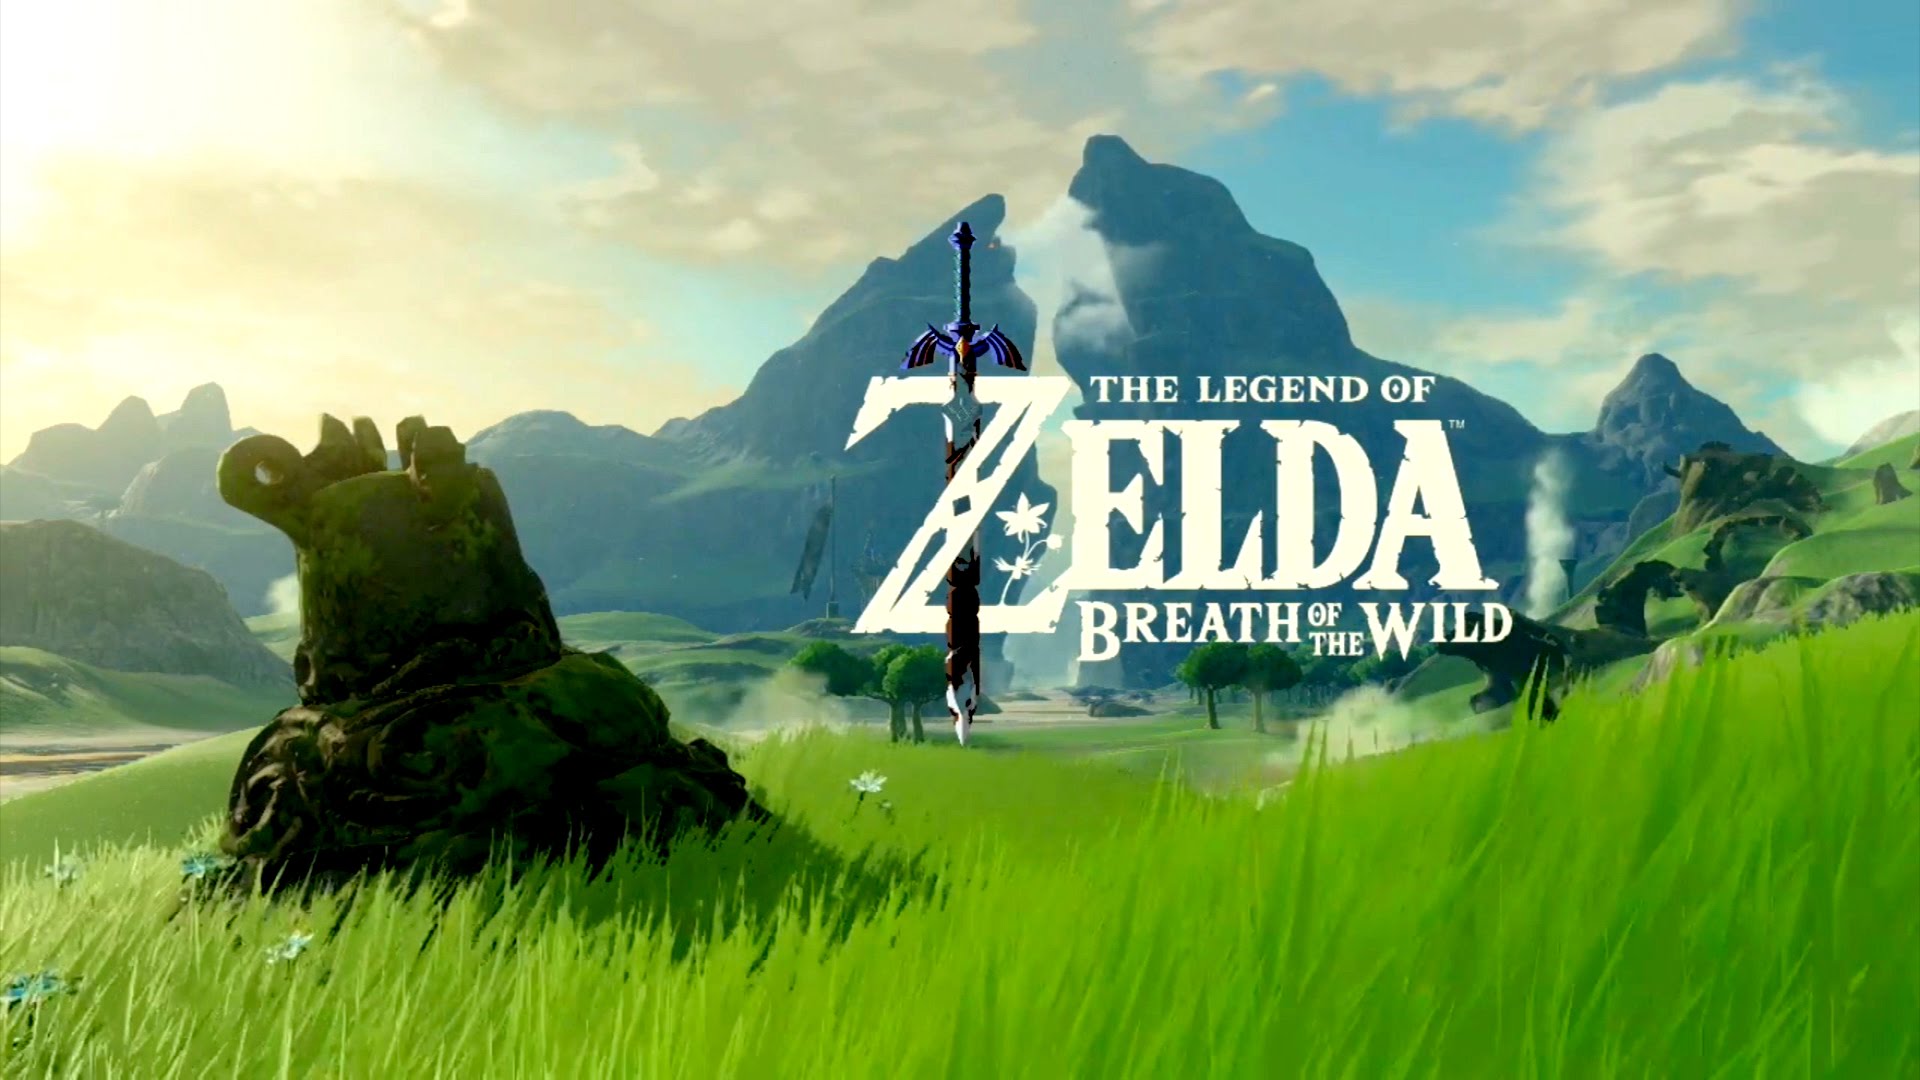 The Legend of Zelda: Breath of the Wild, PC Gameplay, Cemu Emulator, GTX  1070